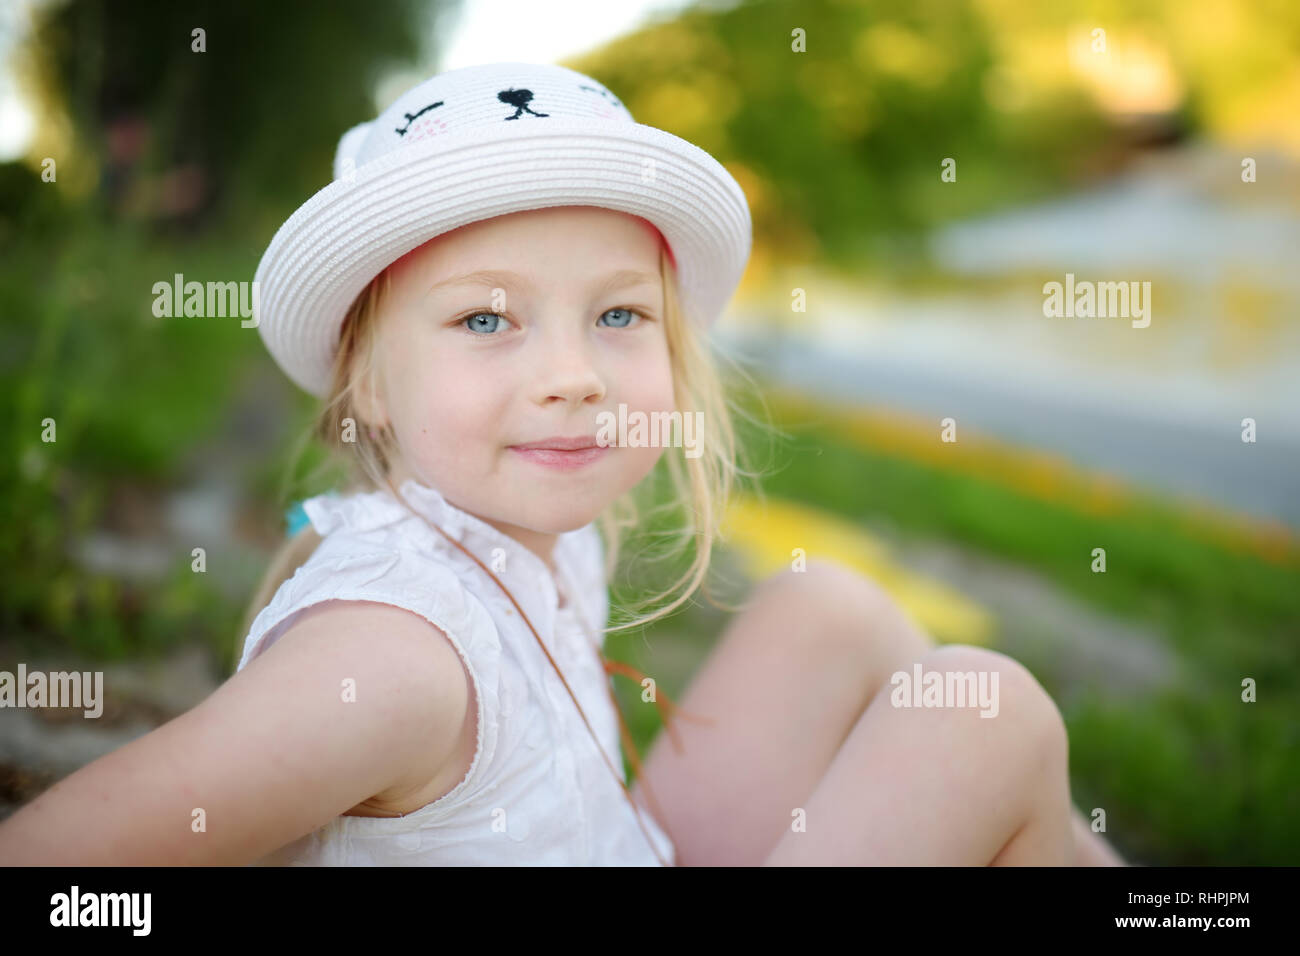 Niño caucásico pequeño con sombrero explorador Foto de stock